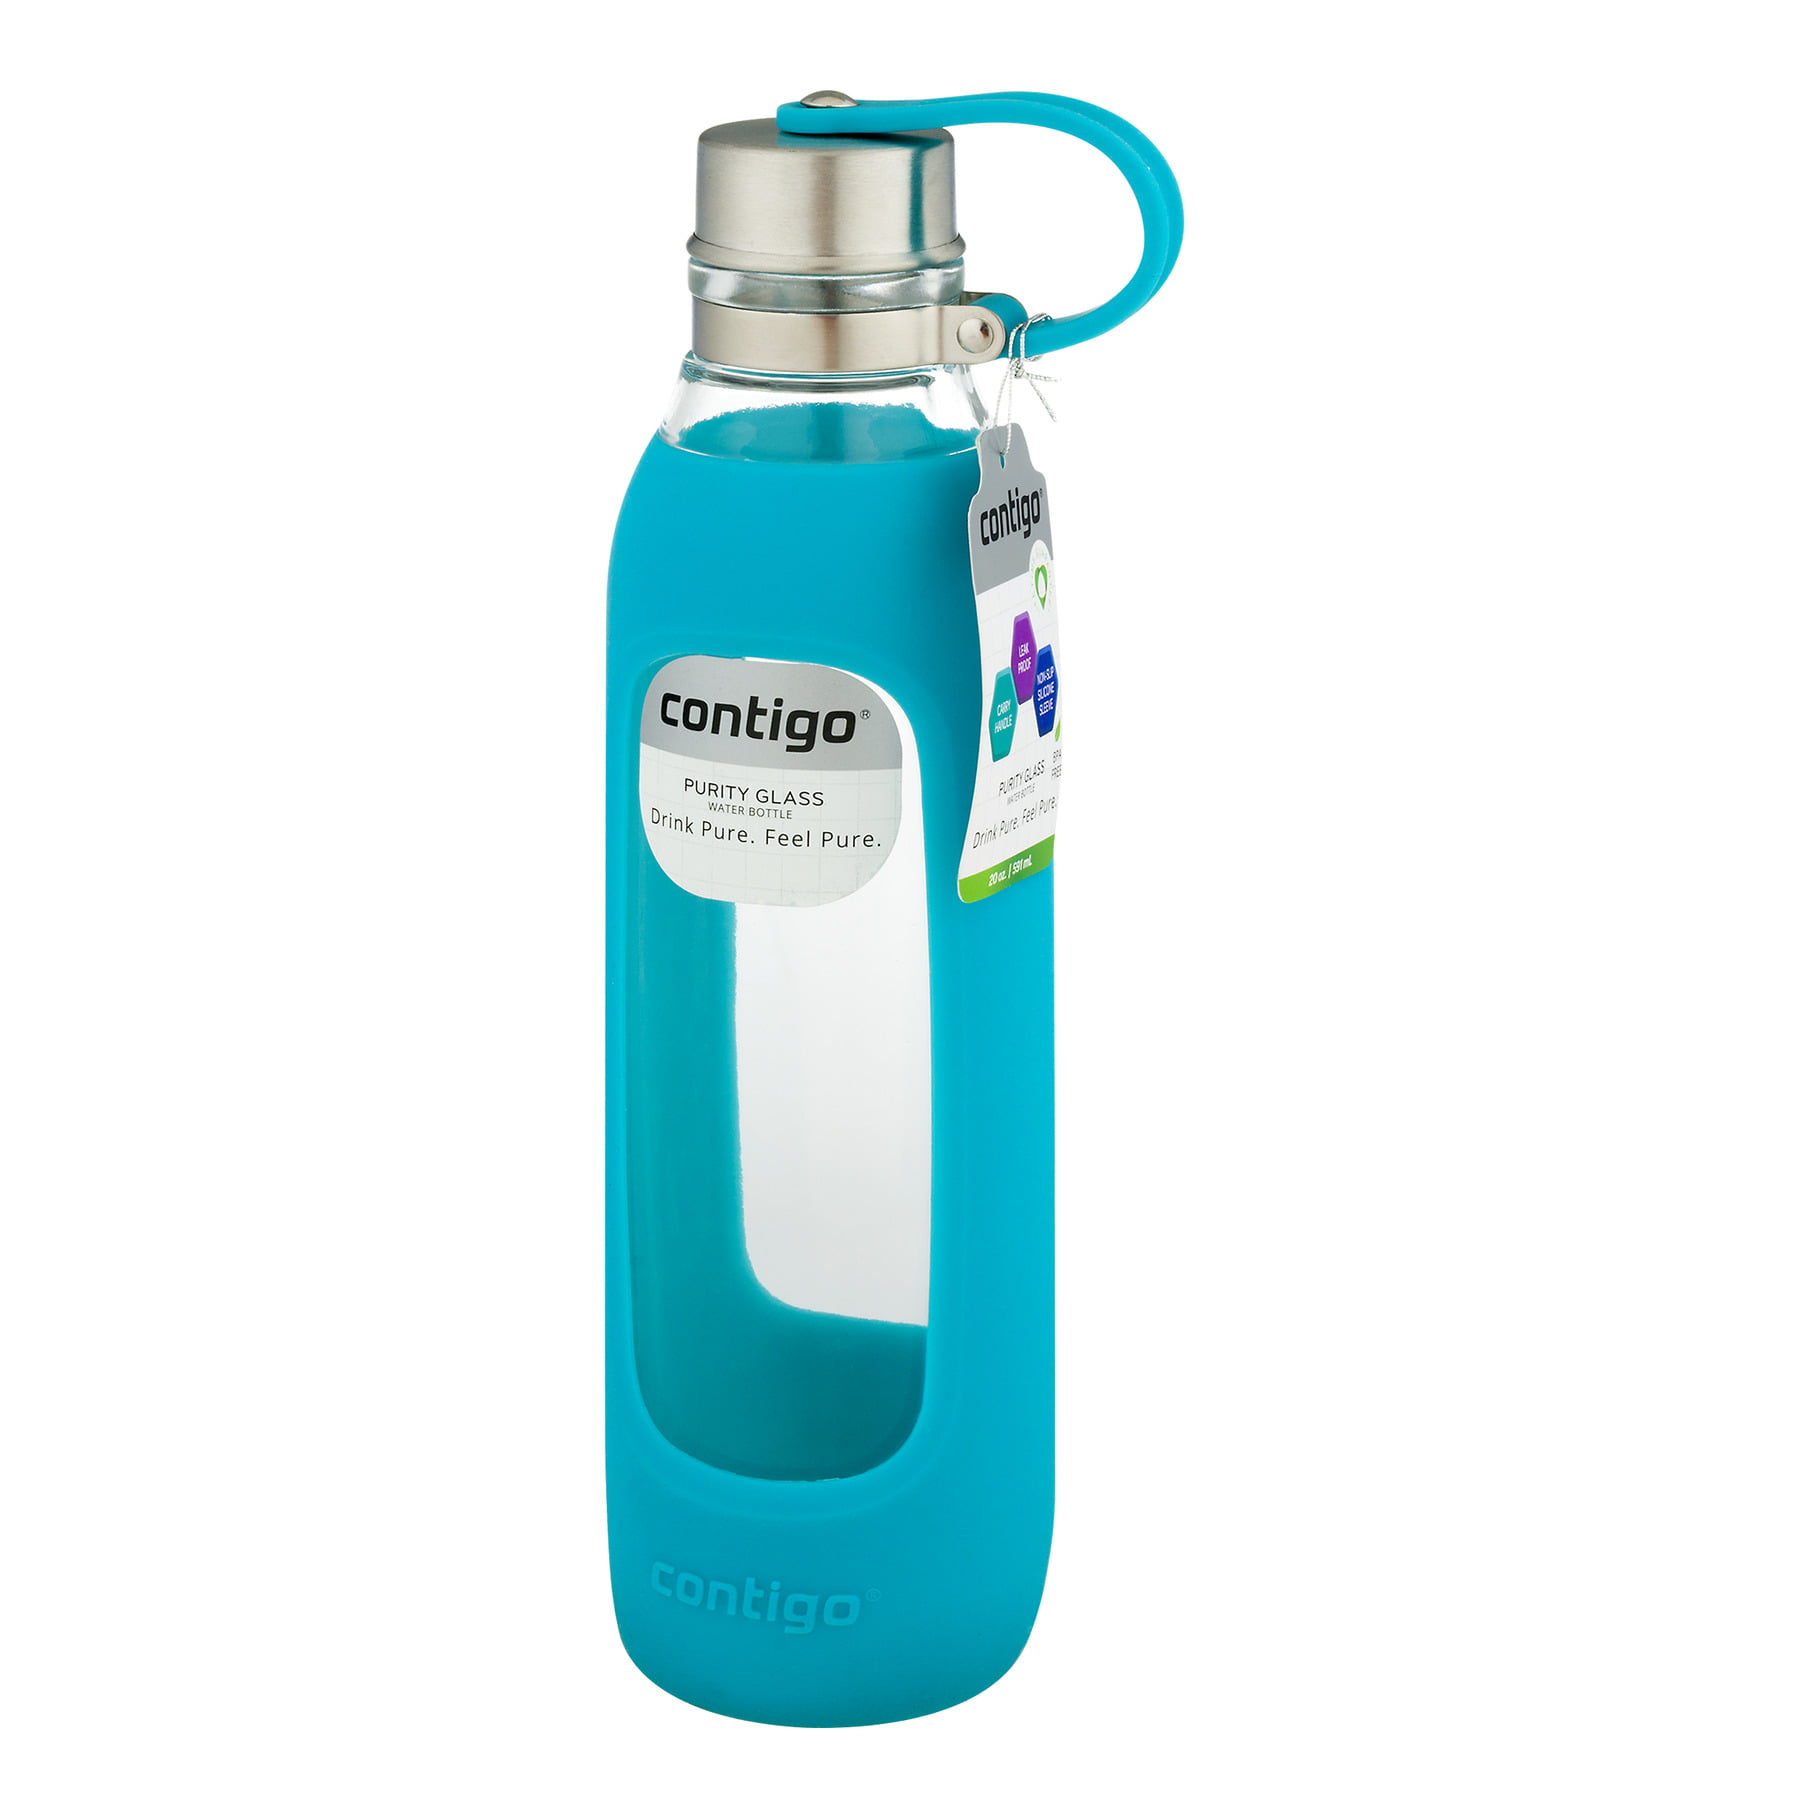 Contigo Purity Glass Water Bottle - Smoke, 20 oz - Mariano's